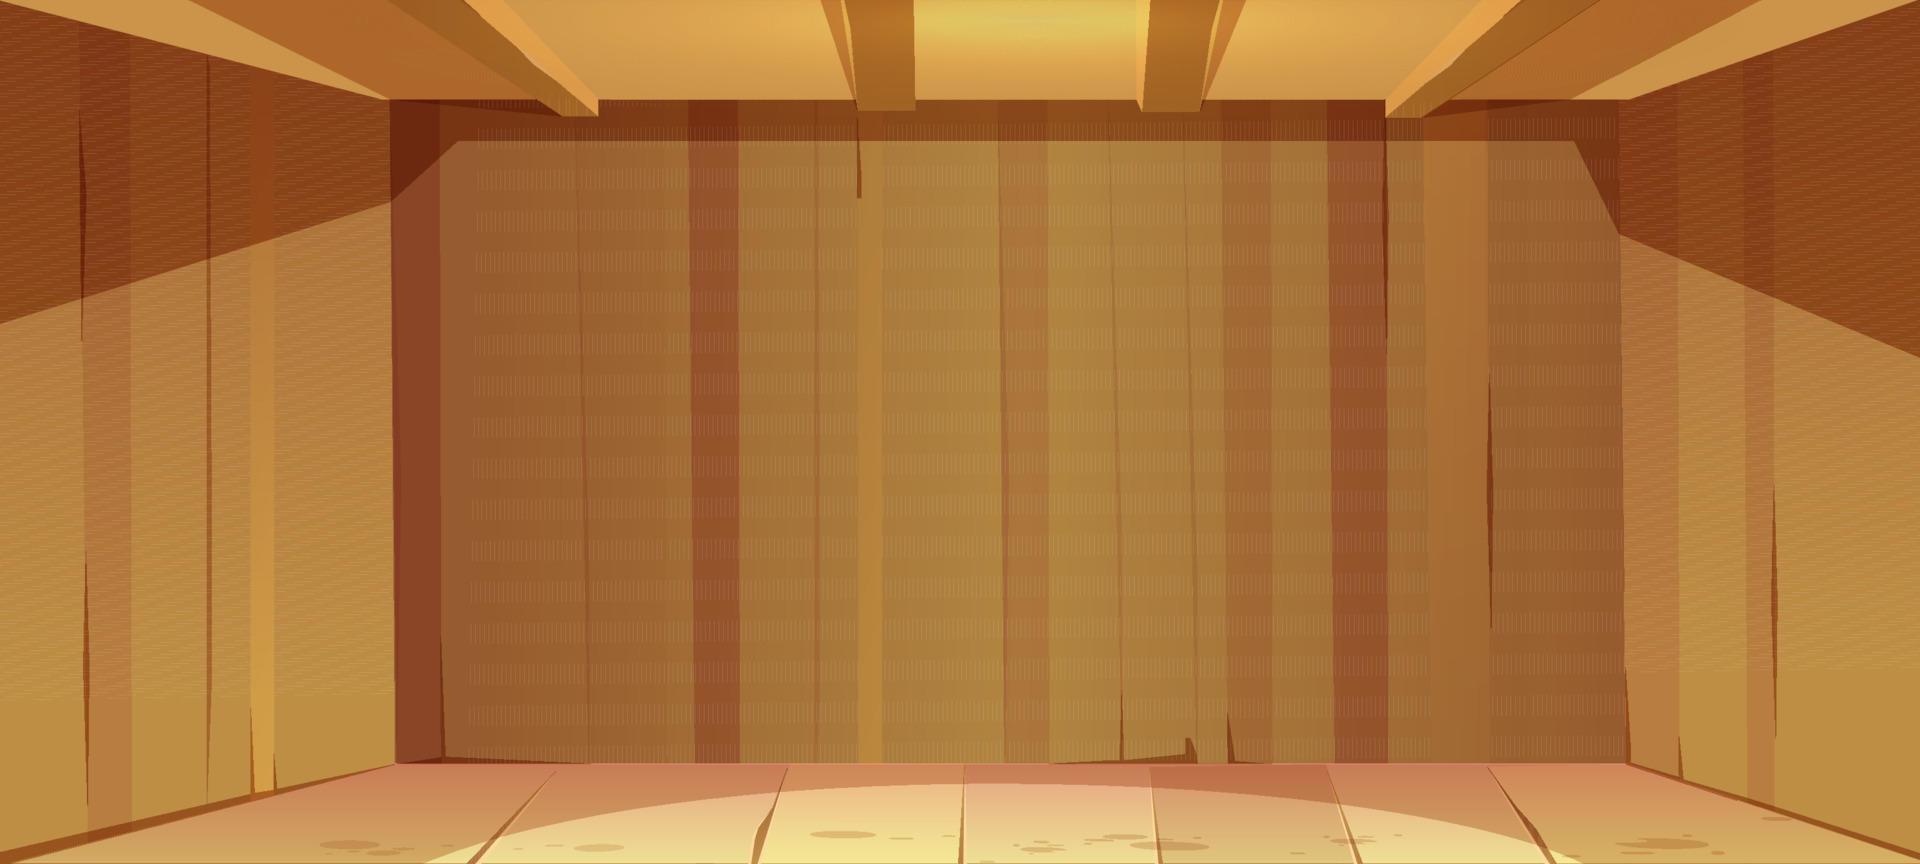 Empty room with wooden walls, ceiling and floor vector